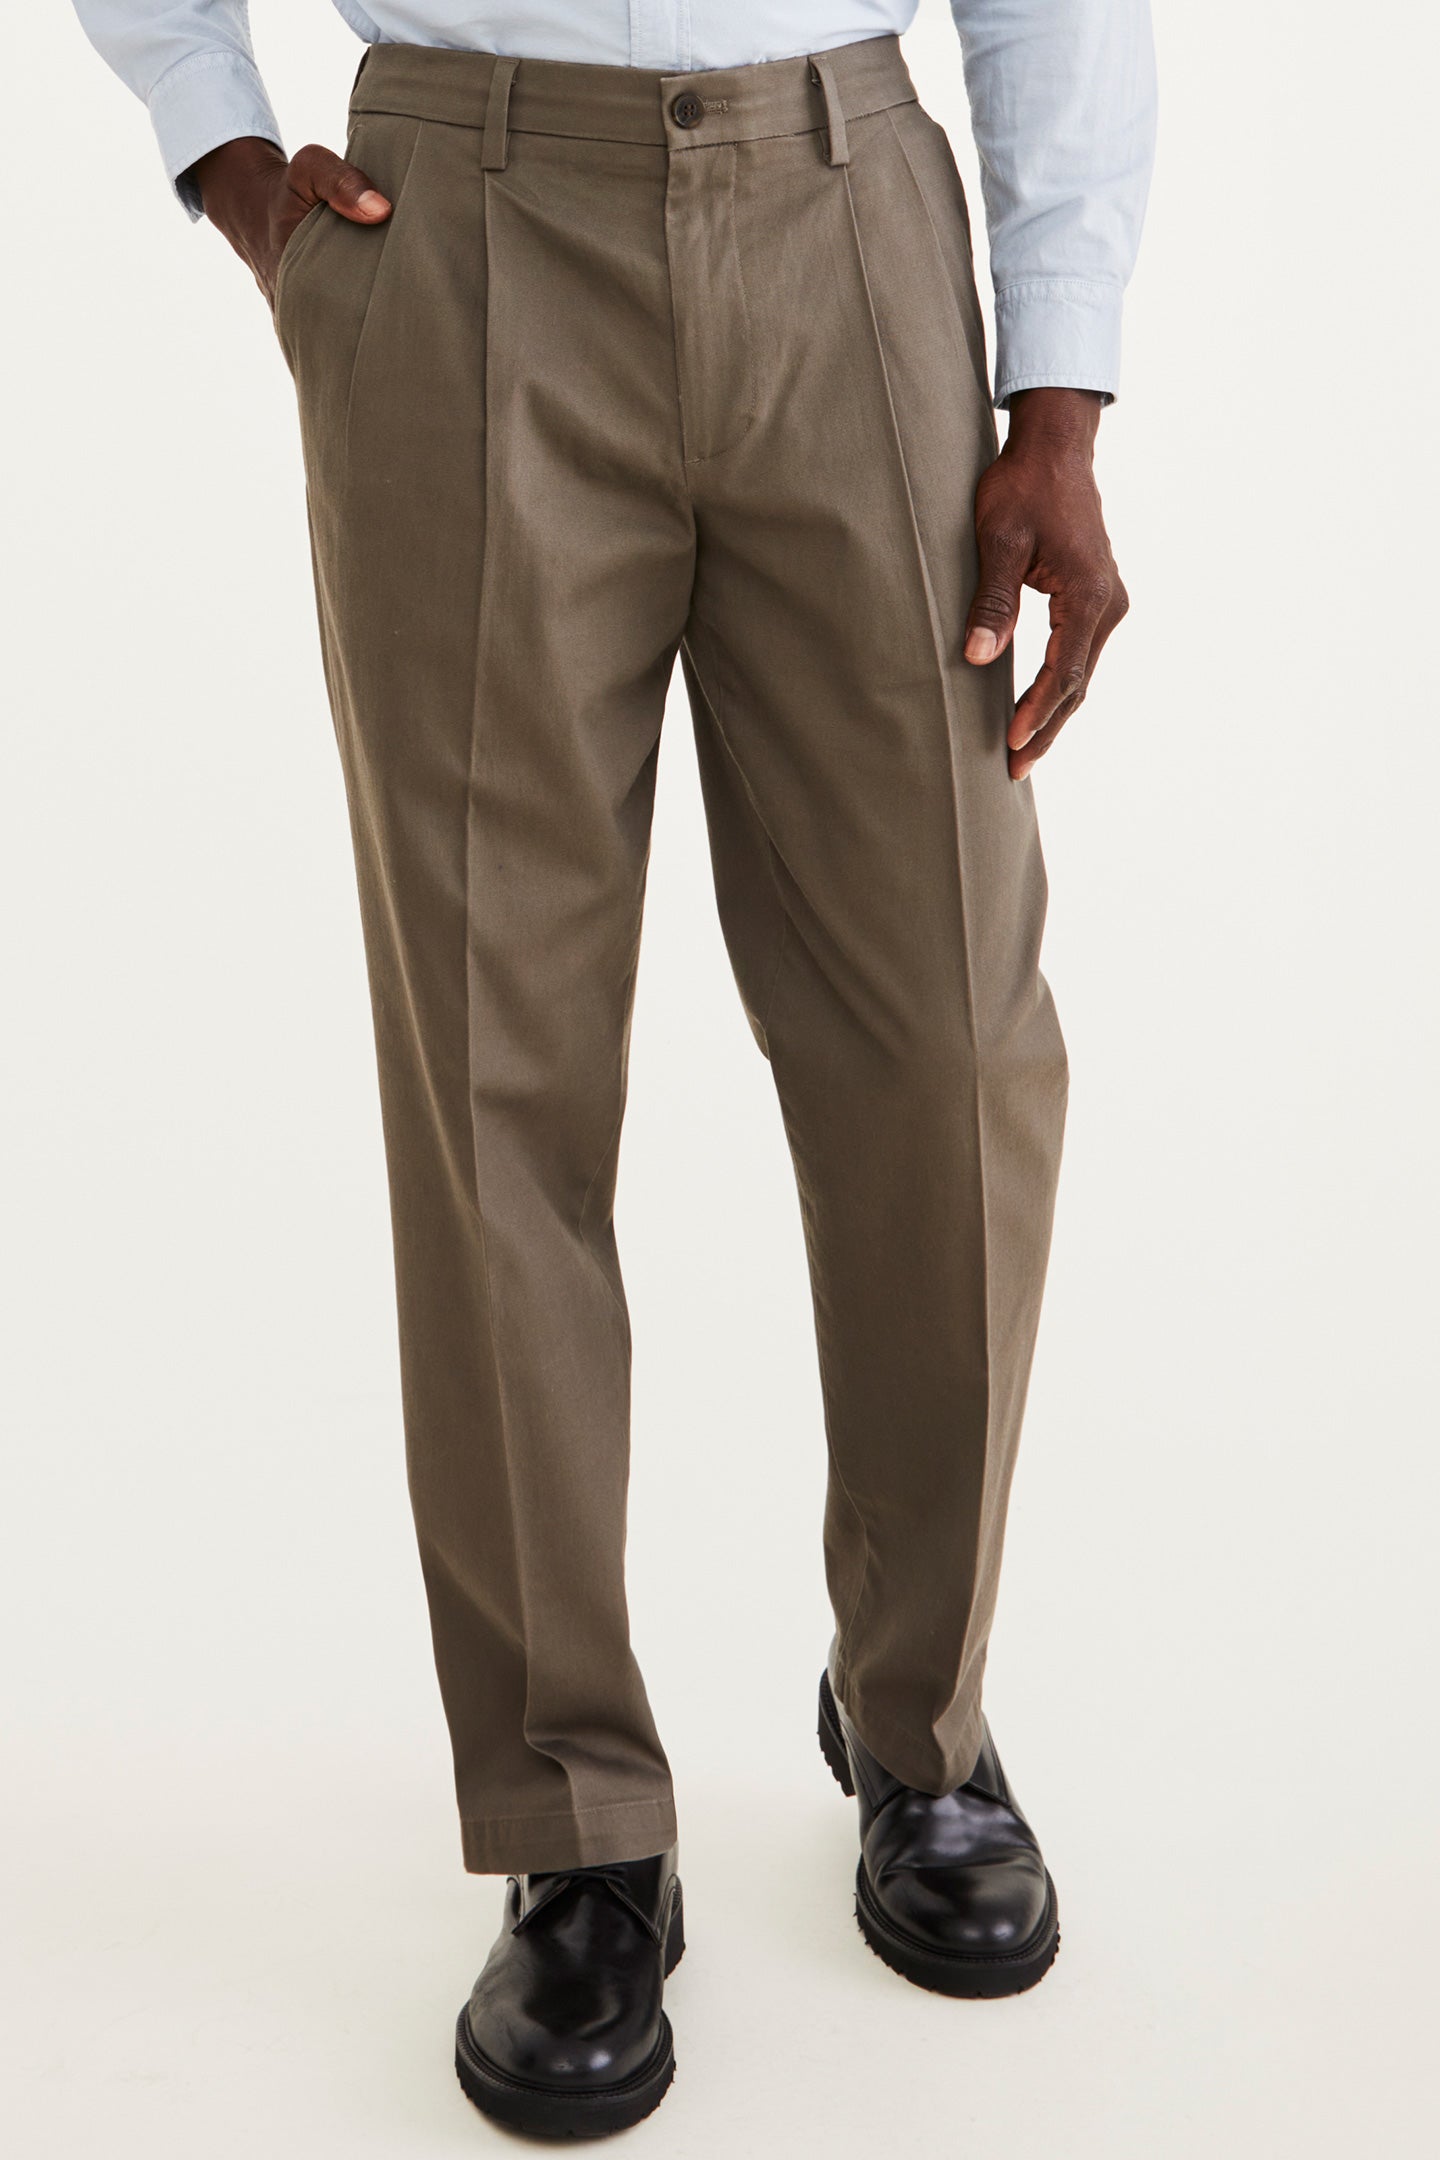 Mens High Waist Straight Legs Trousers Business Casual Office Dress Pants  Work | eBay